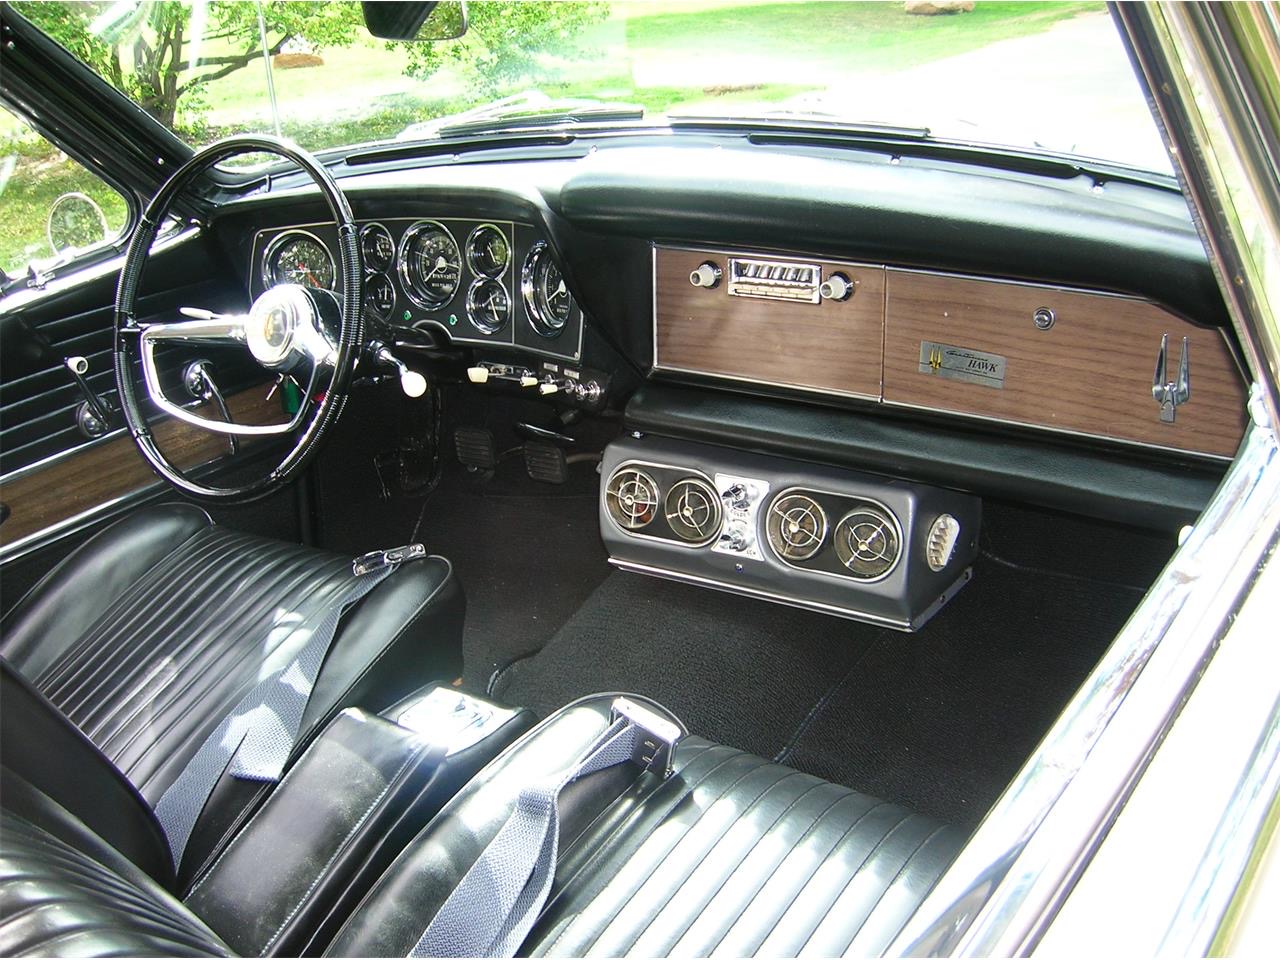 1964 Studebaker, Last of the breed: 1964 Studebaker GT Hawk, ClassicCars.com Journal